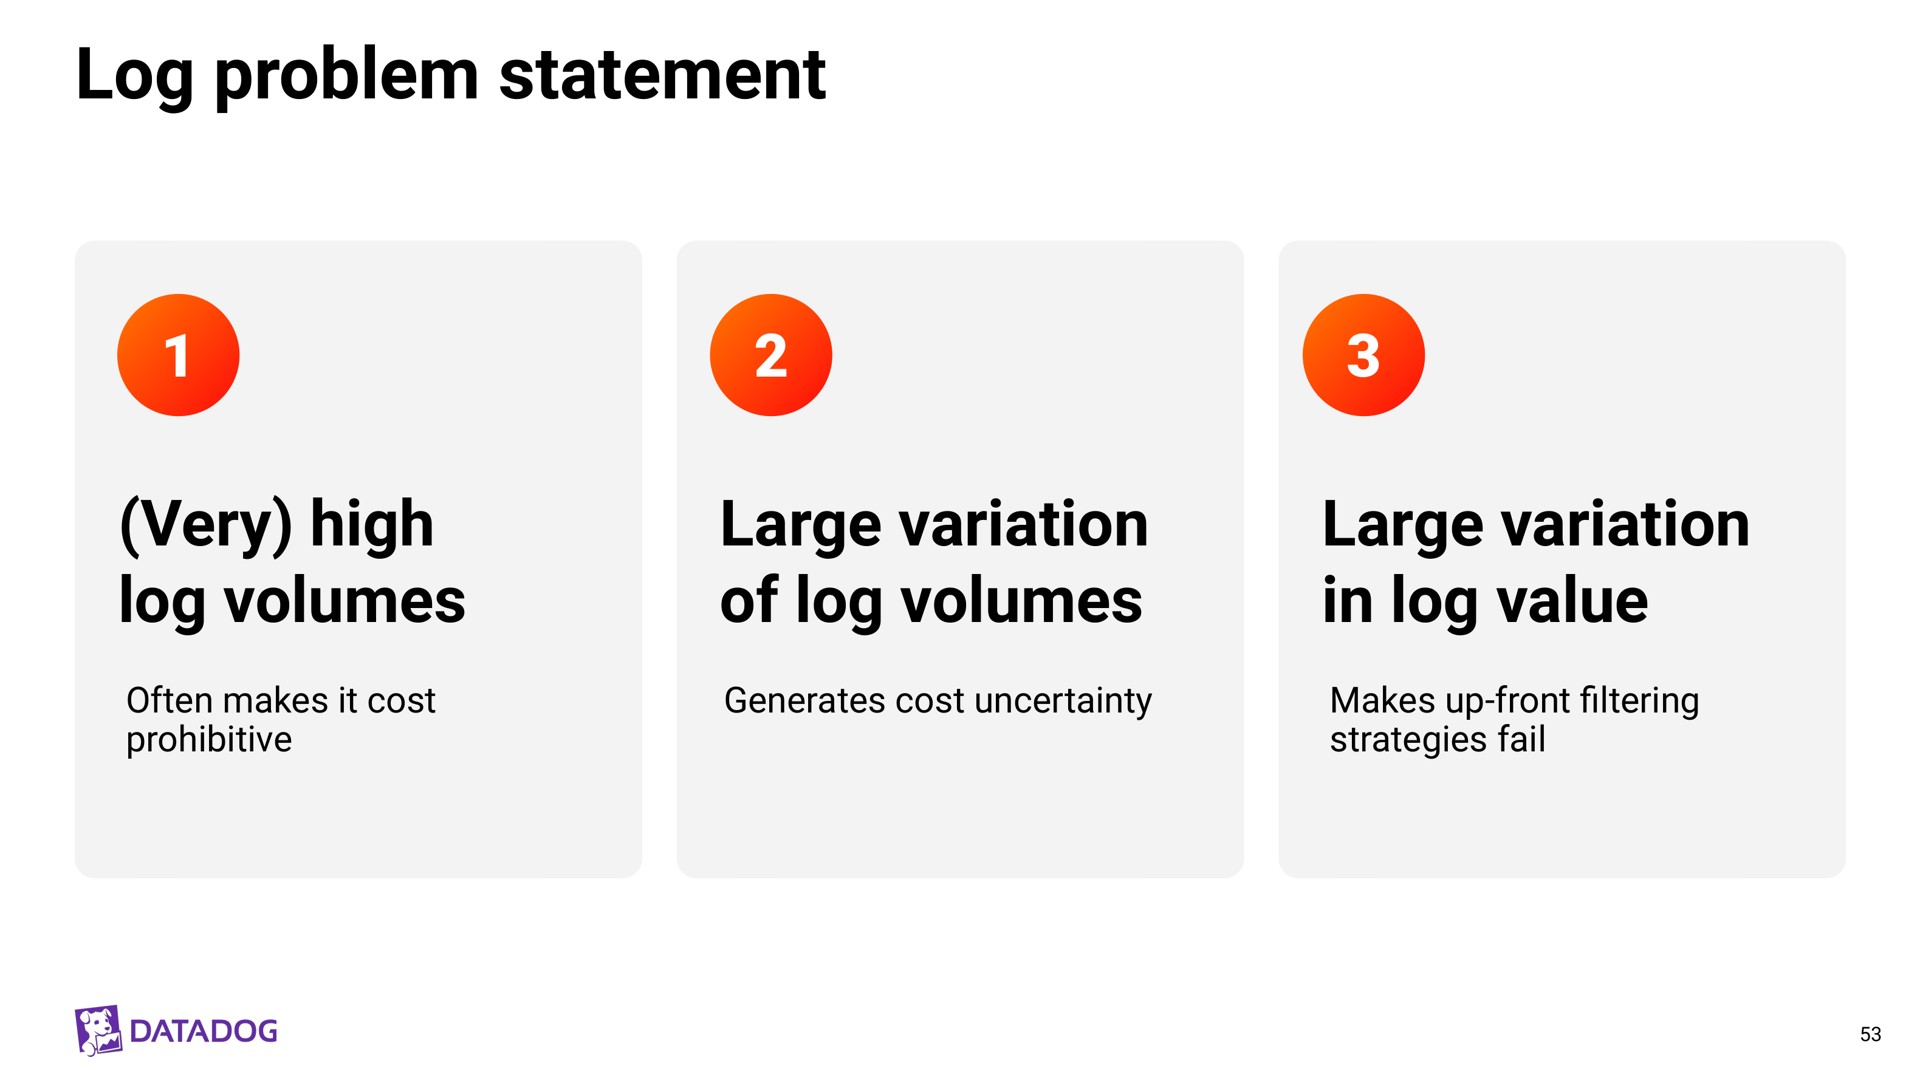 log problem statement very high volumes large variation of volumes large variation in value | Datadog